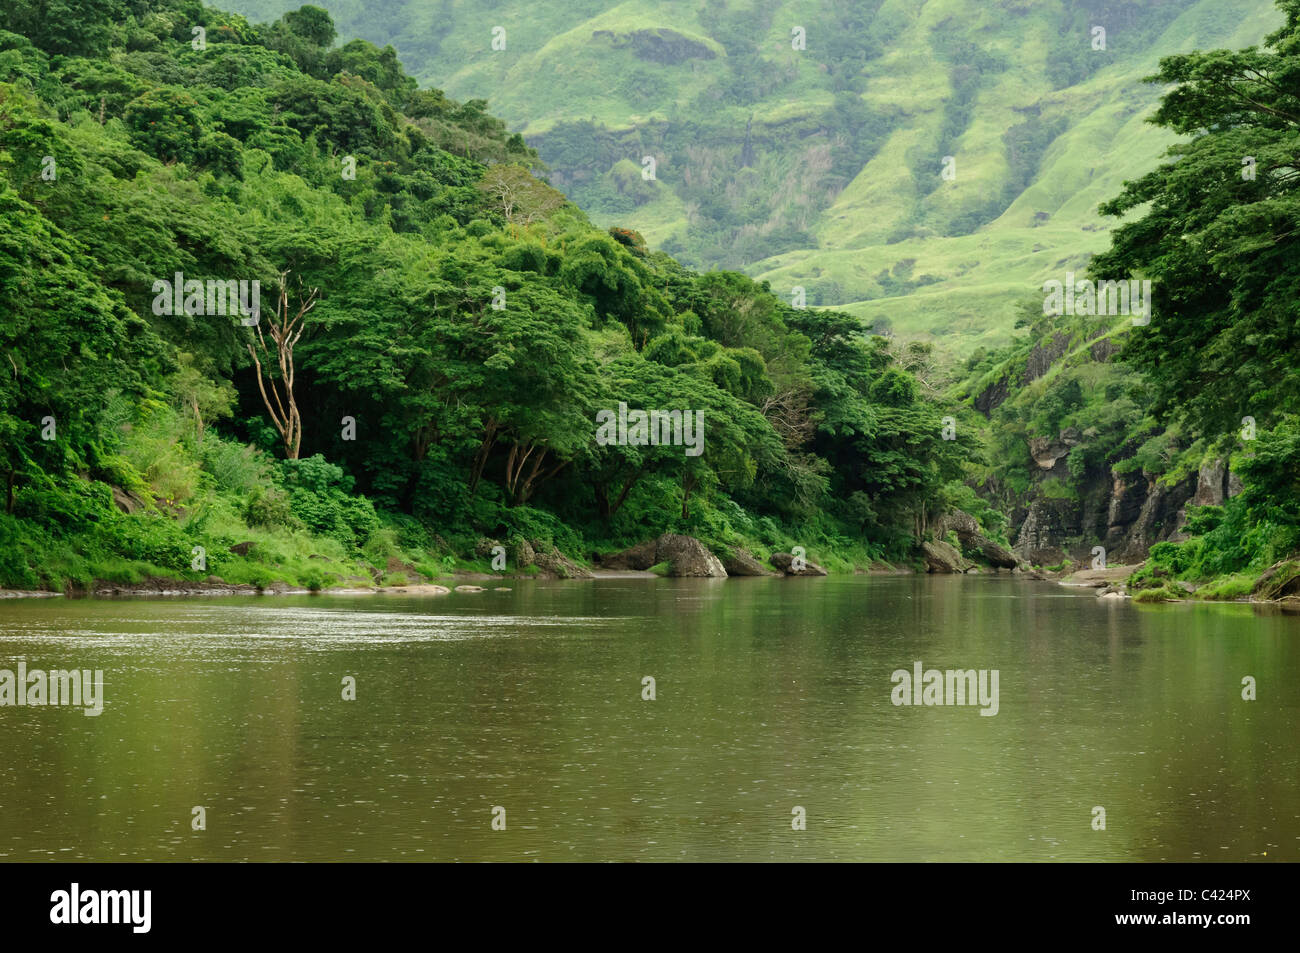 BA-Fluss in der Nähe Navala Dorf im Nausori-Hochland der Insel Viti Levu, Fidschi-Inseln. Stockfoto